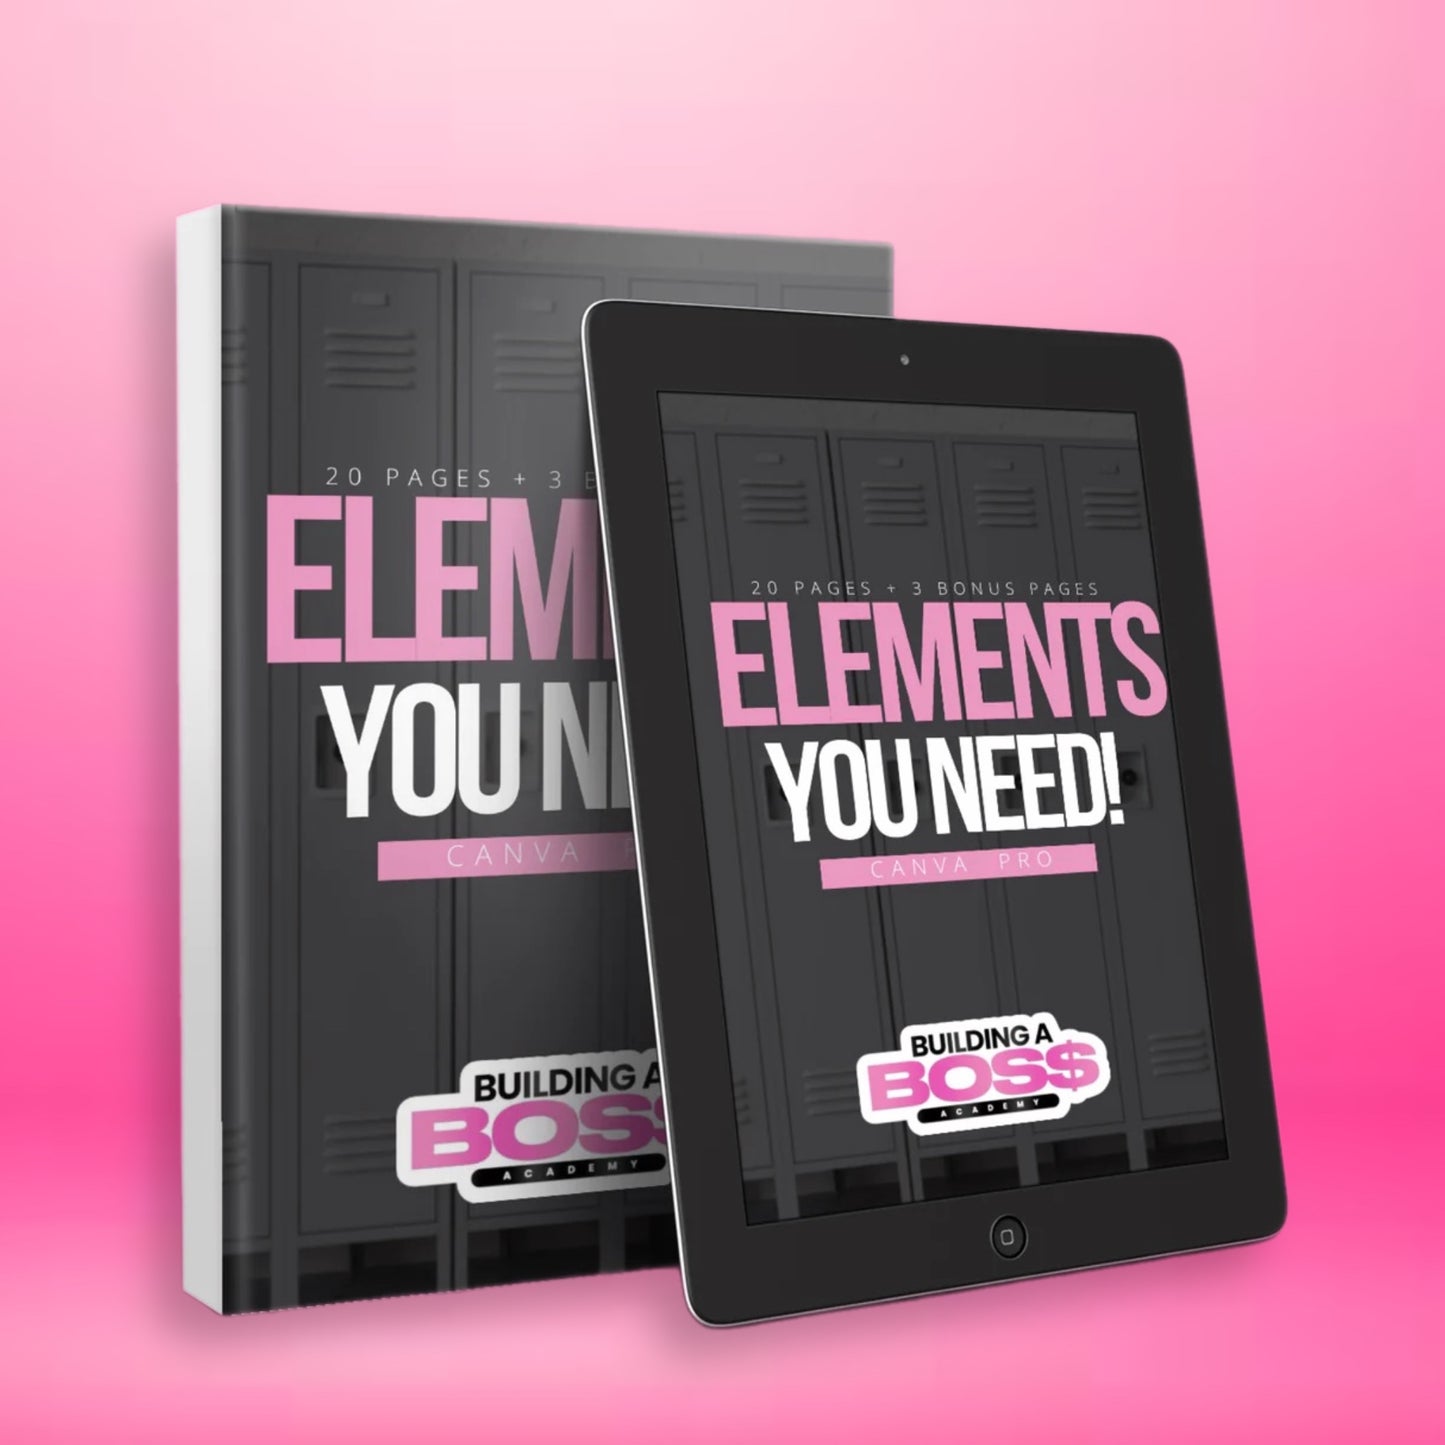 Elements You Need!